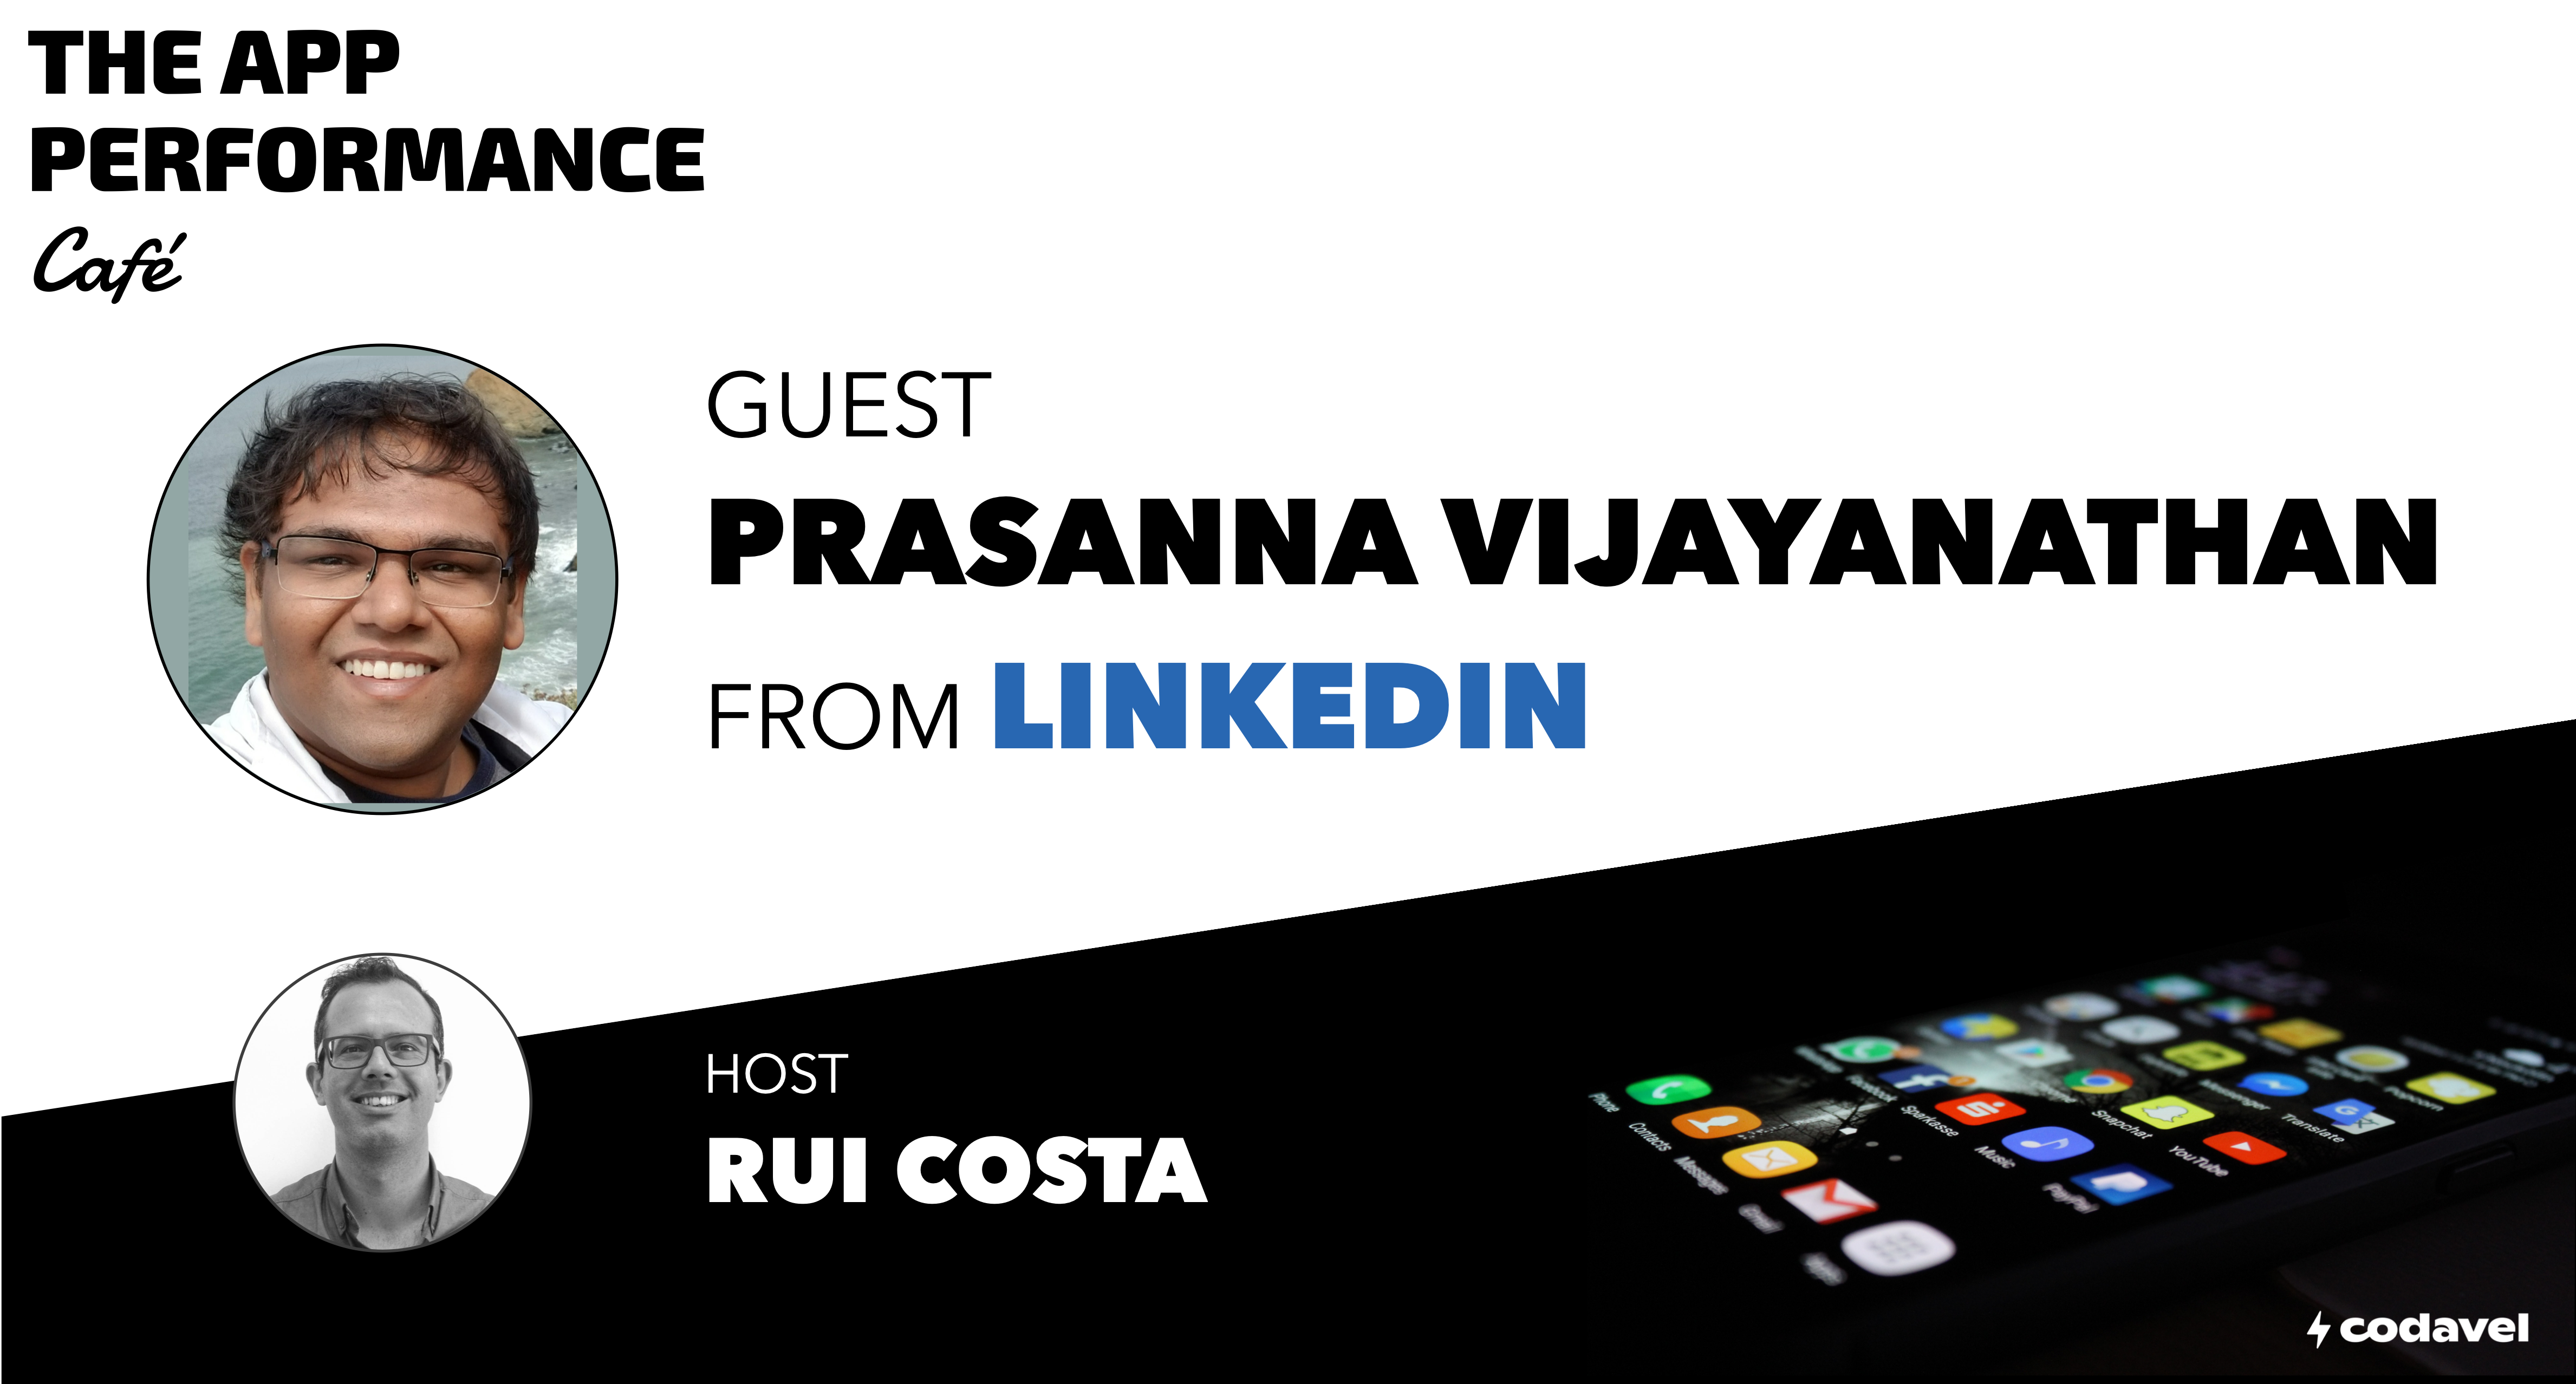 Café with Prasanna from LinkedIn, on personalized app performance